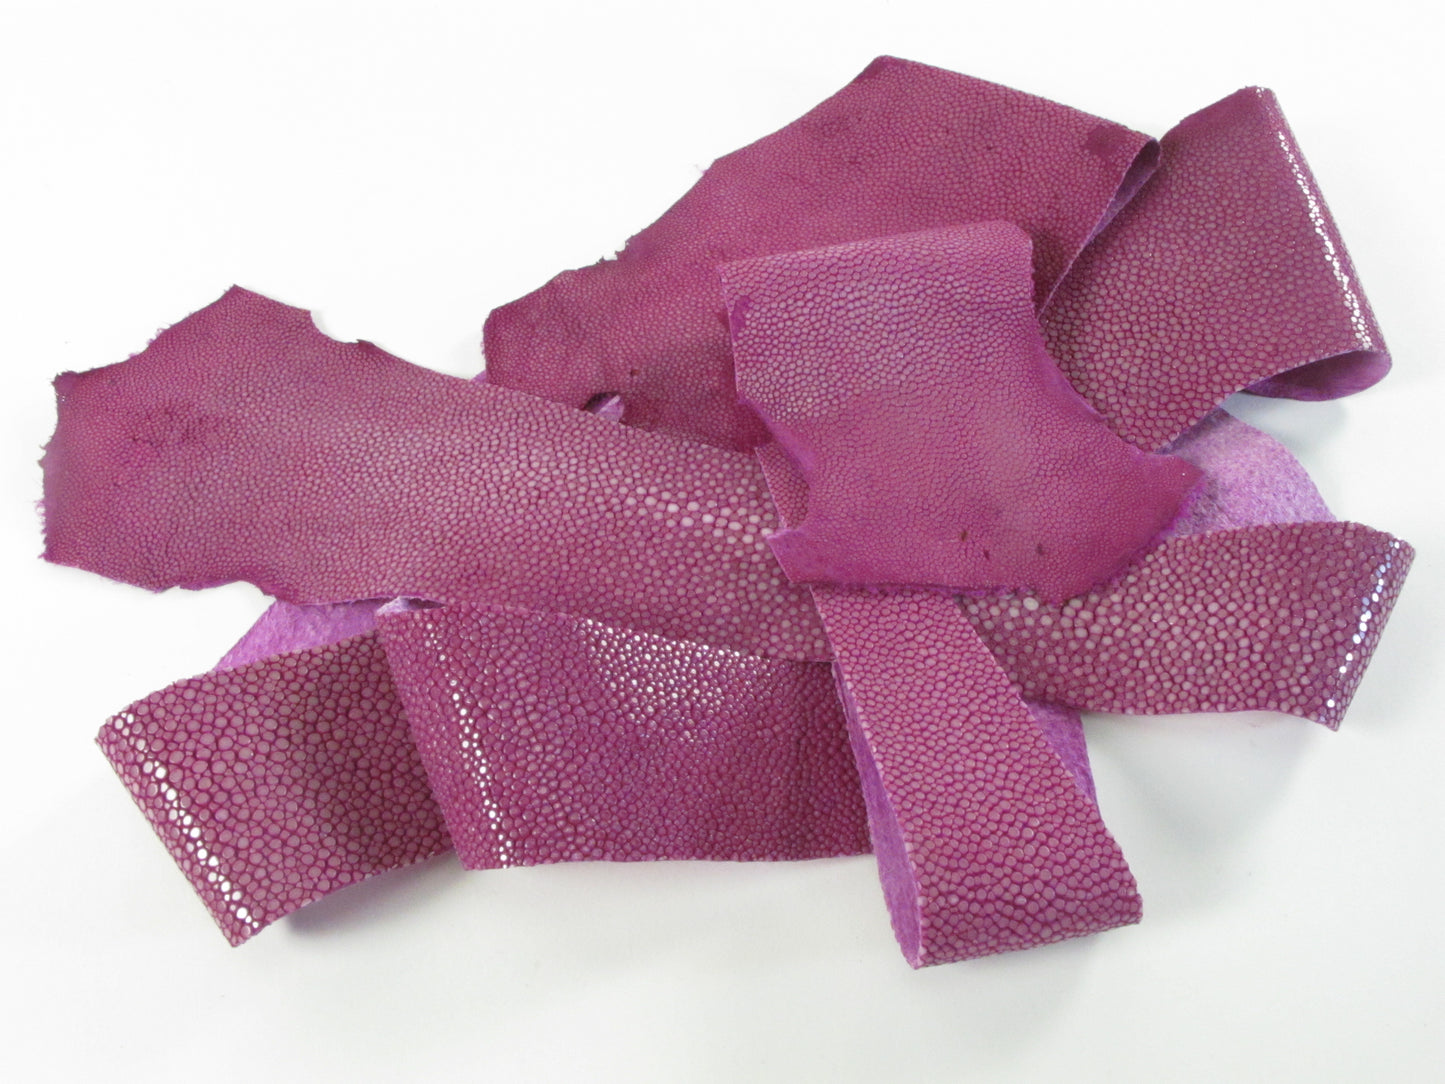 Genuine Polished Stingray Skin Leather Scraps Hide Pelt 100 grams